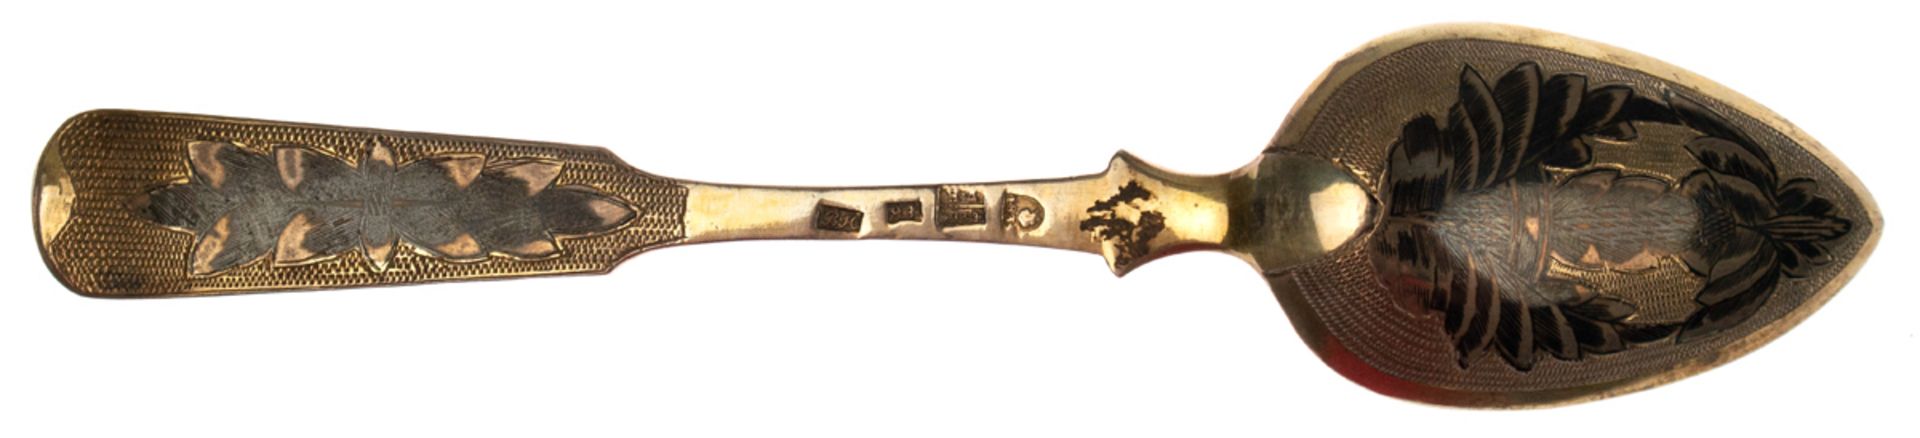 2 Löffel, Moskau 1833/34, 84 Zol. Silber, punziert, ca. 76 g, vergoldet, Niellodekor,Spatenform, - Image 2 of 3